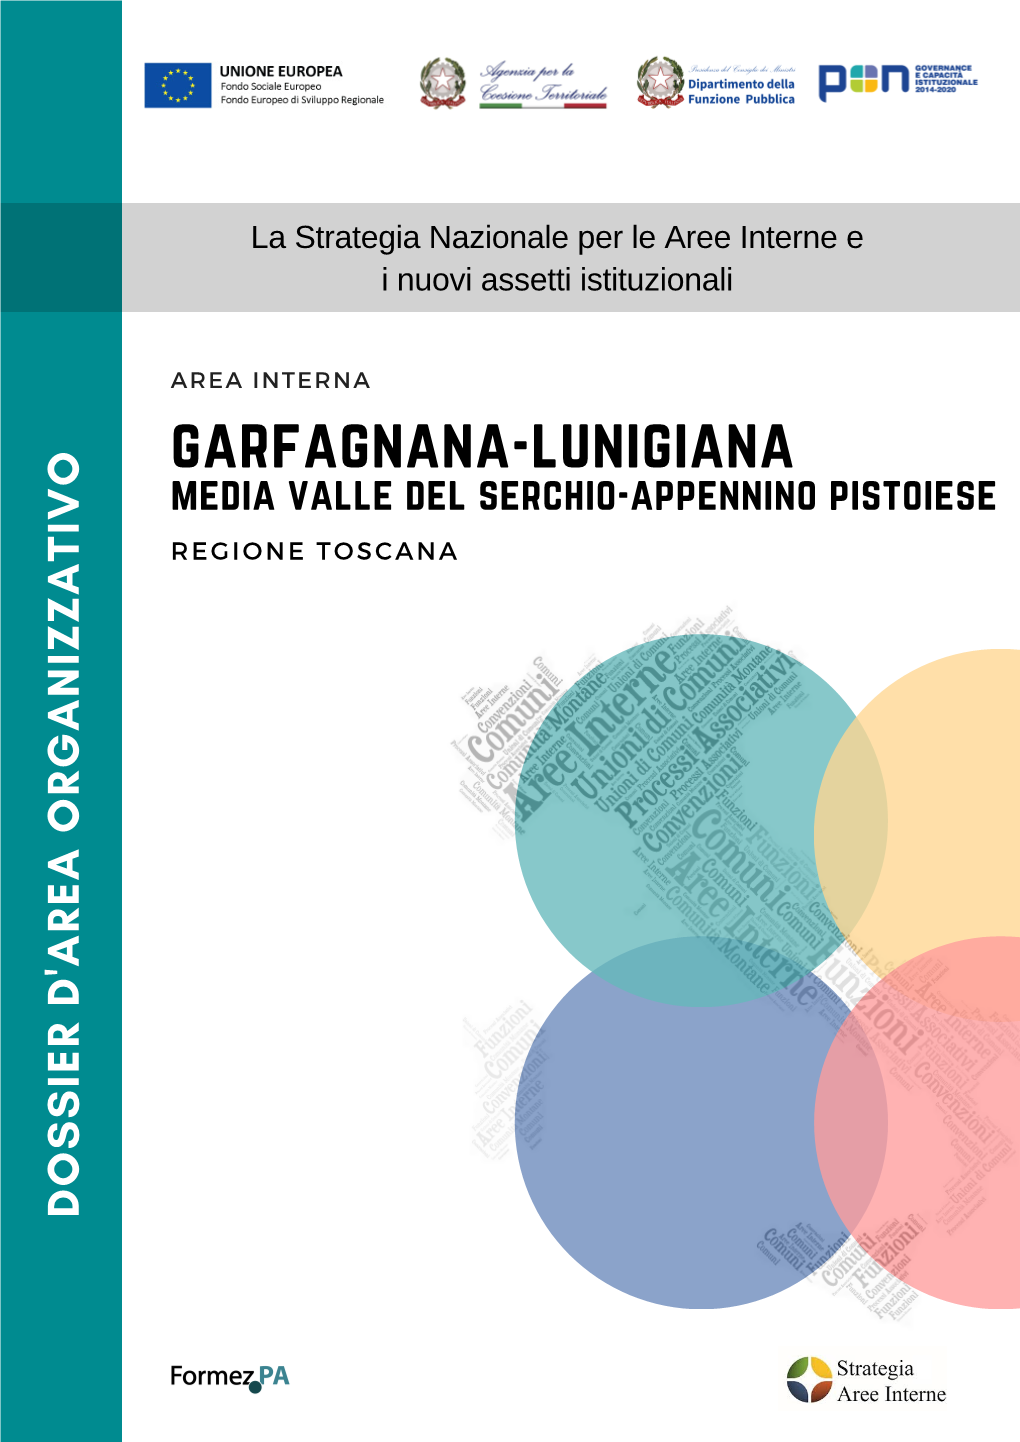 Garfagnana-Lunigiana O Media Valle Del Serchio-Appennino Pistoiese V I REGIONE TOSCANA T a Z Z I N a G R O